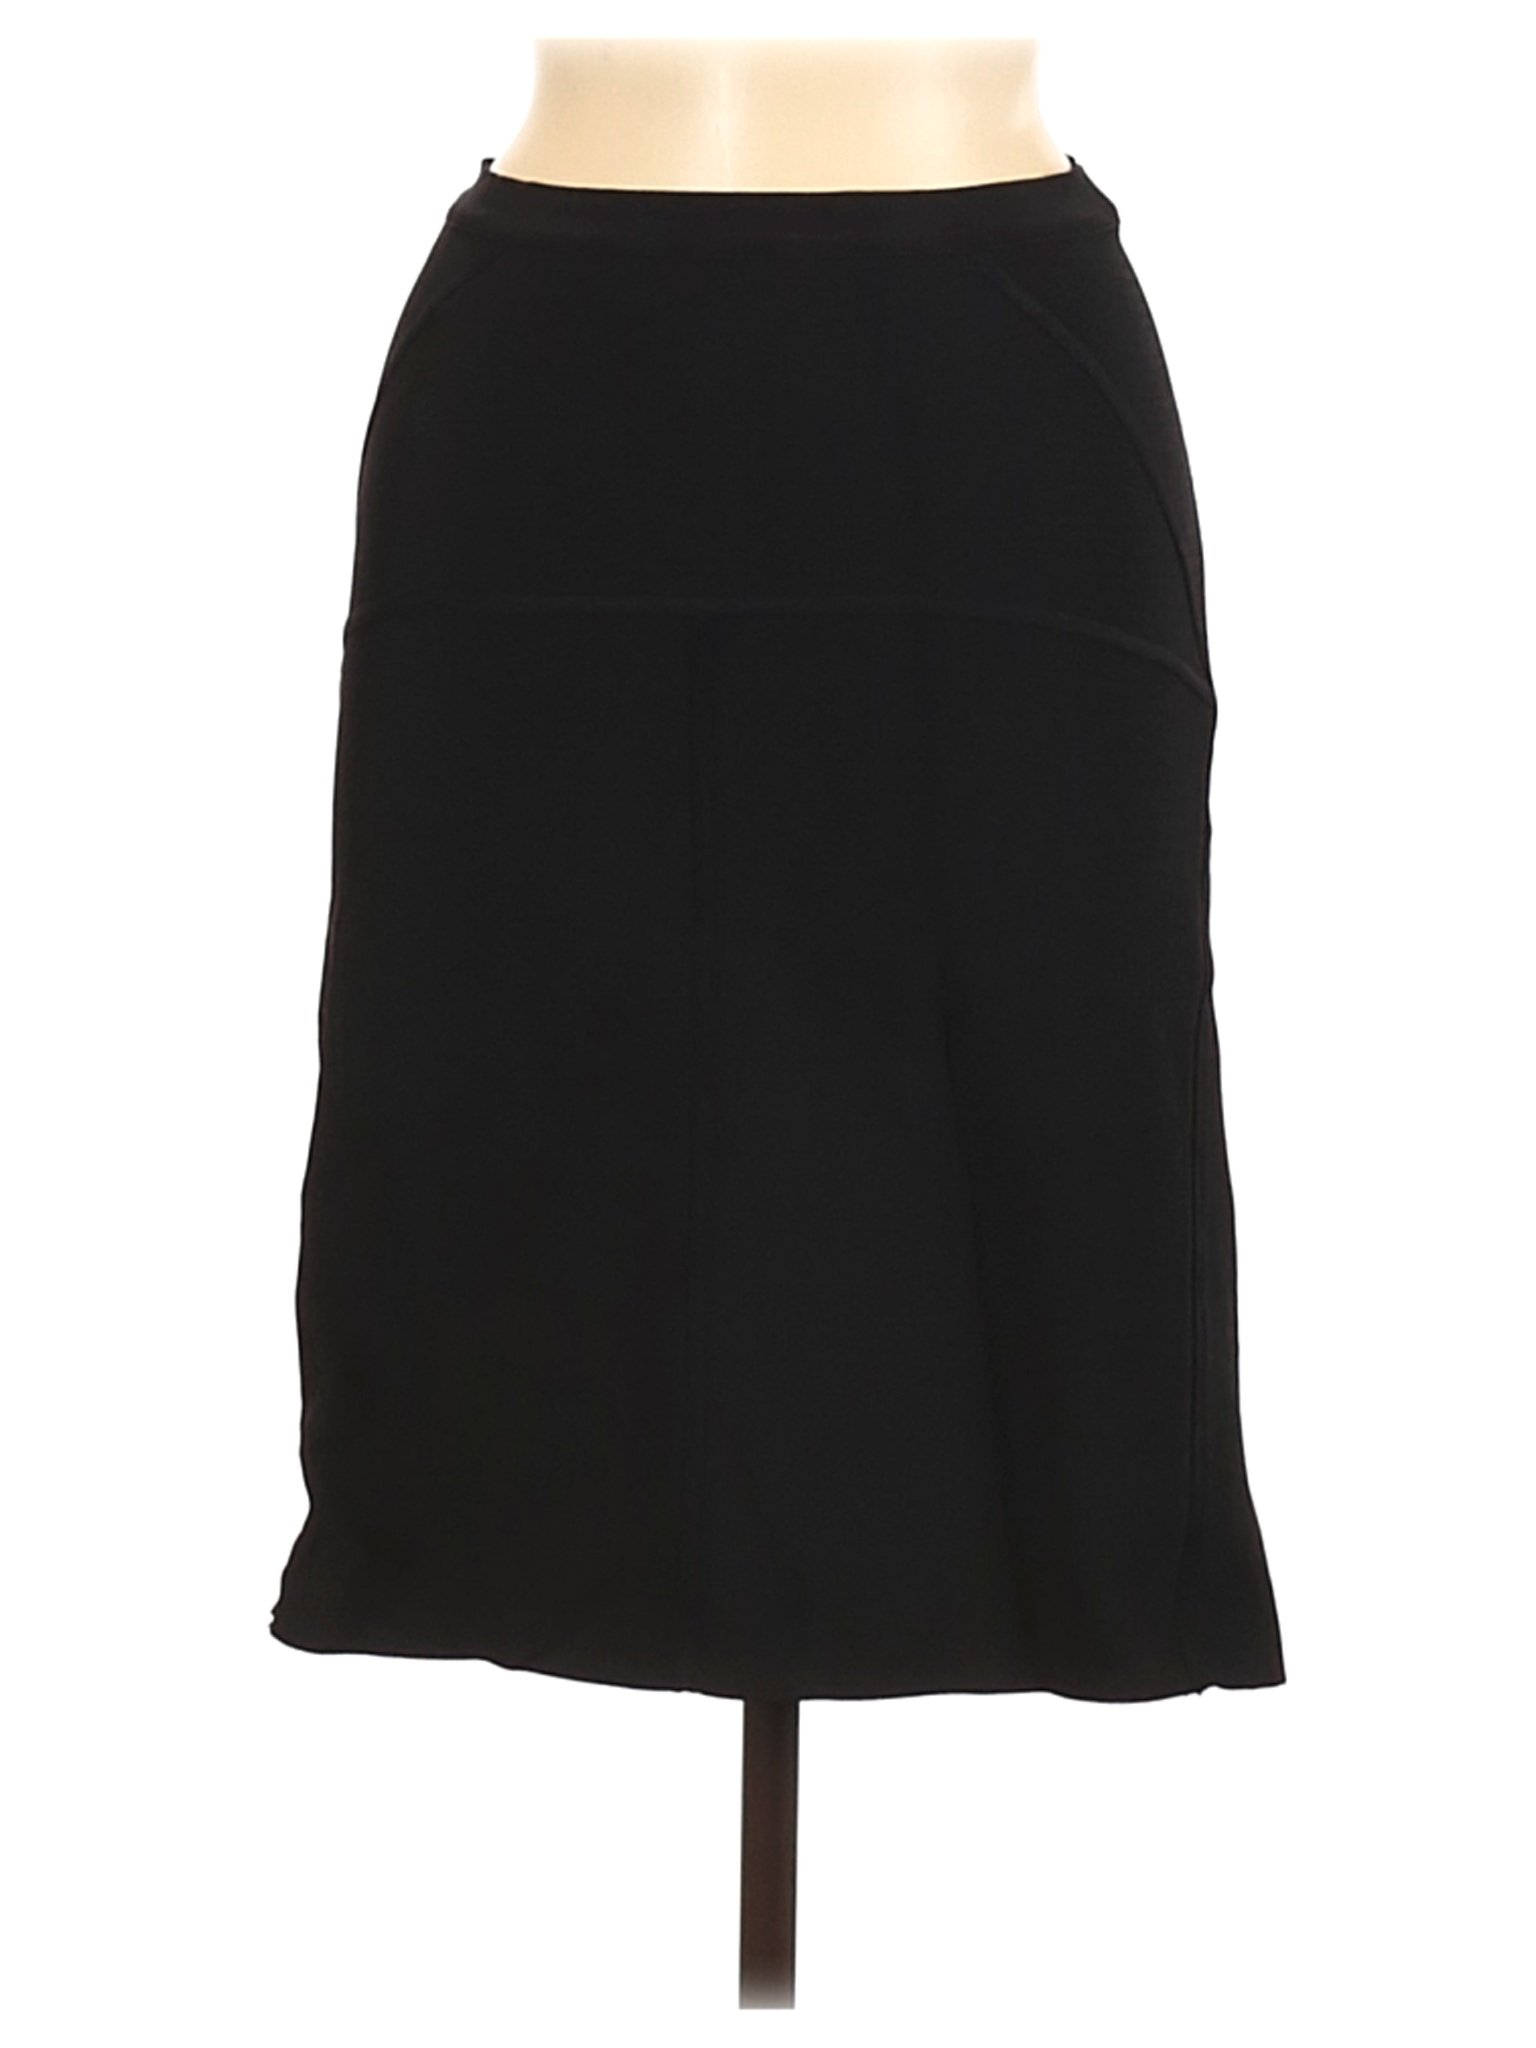 BCBGMAXAZRIA Women Black Casual Skirt M | eBay